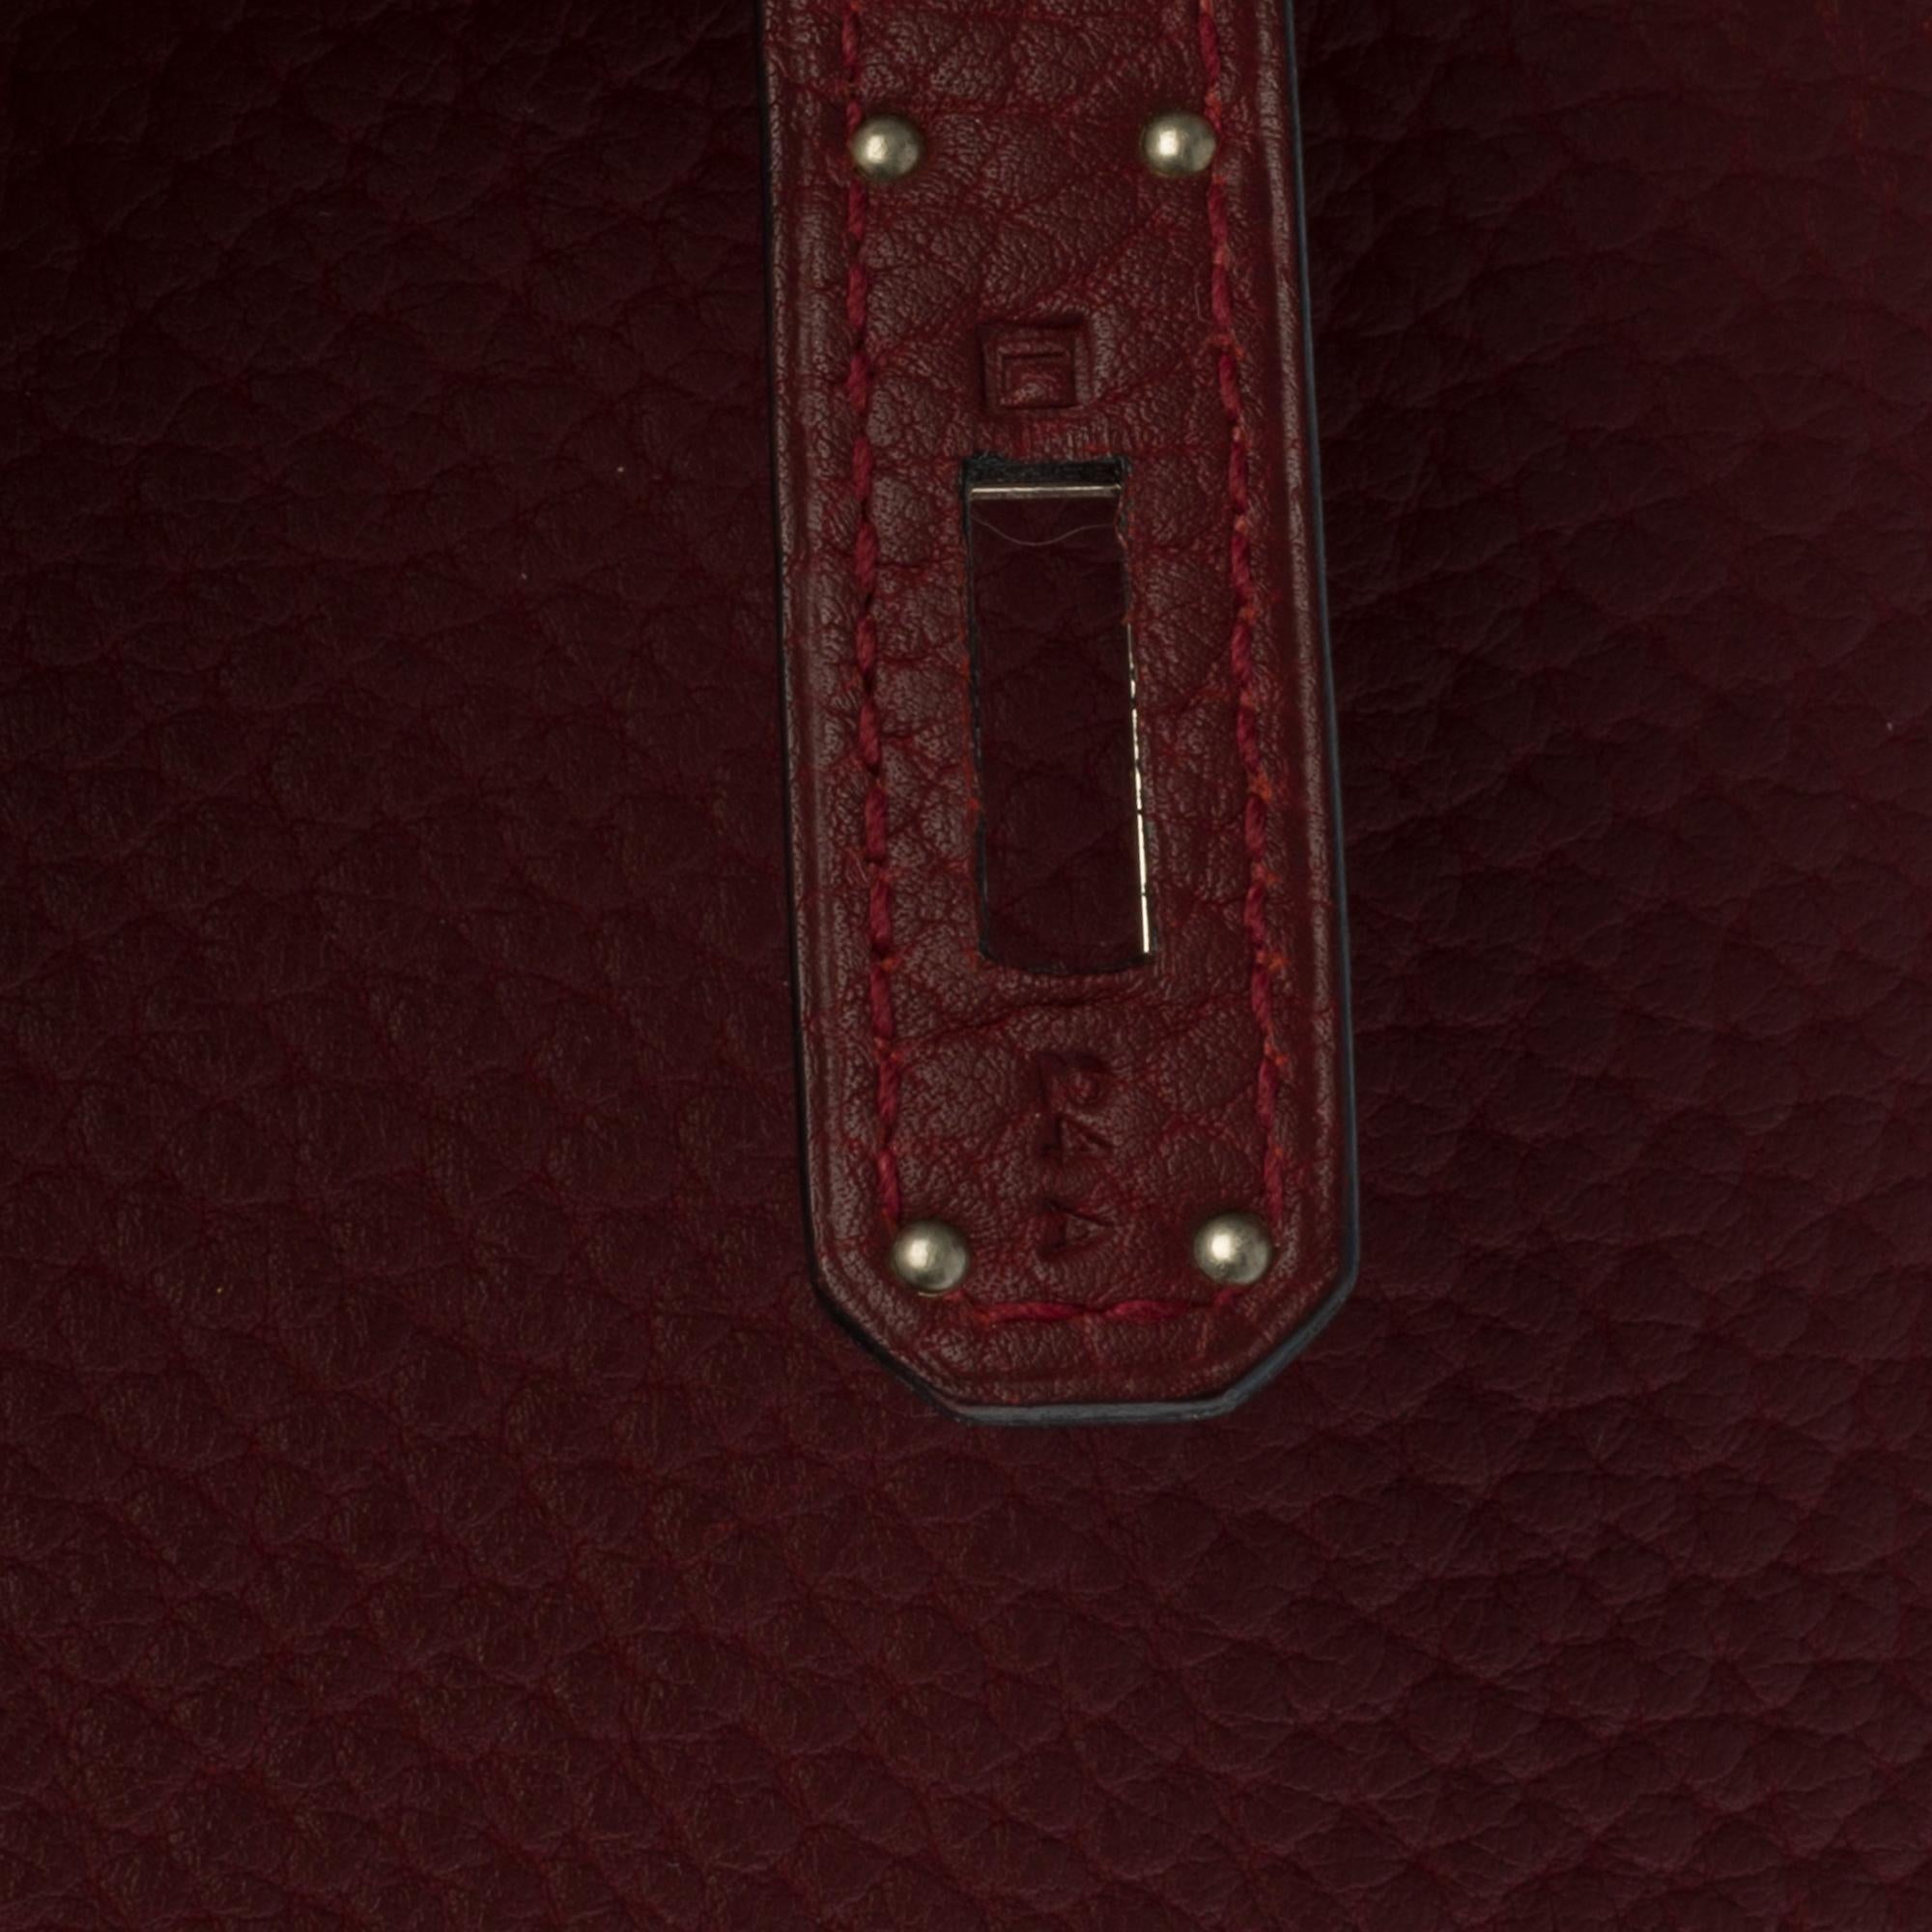 Stunning Hermes Birkin 40cm handbag in burgundy Fjord leather, silver hardware 1